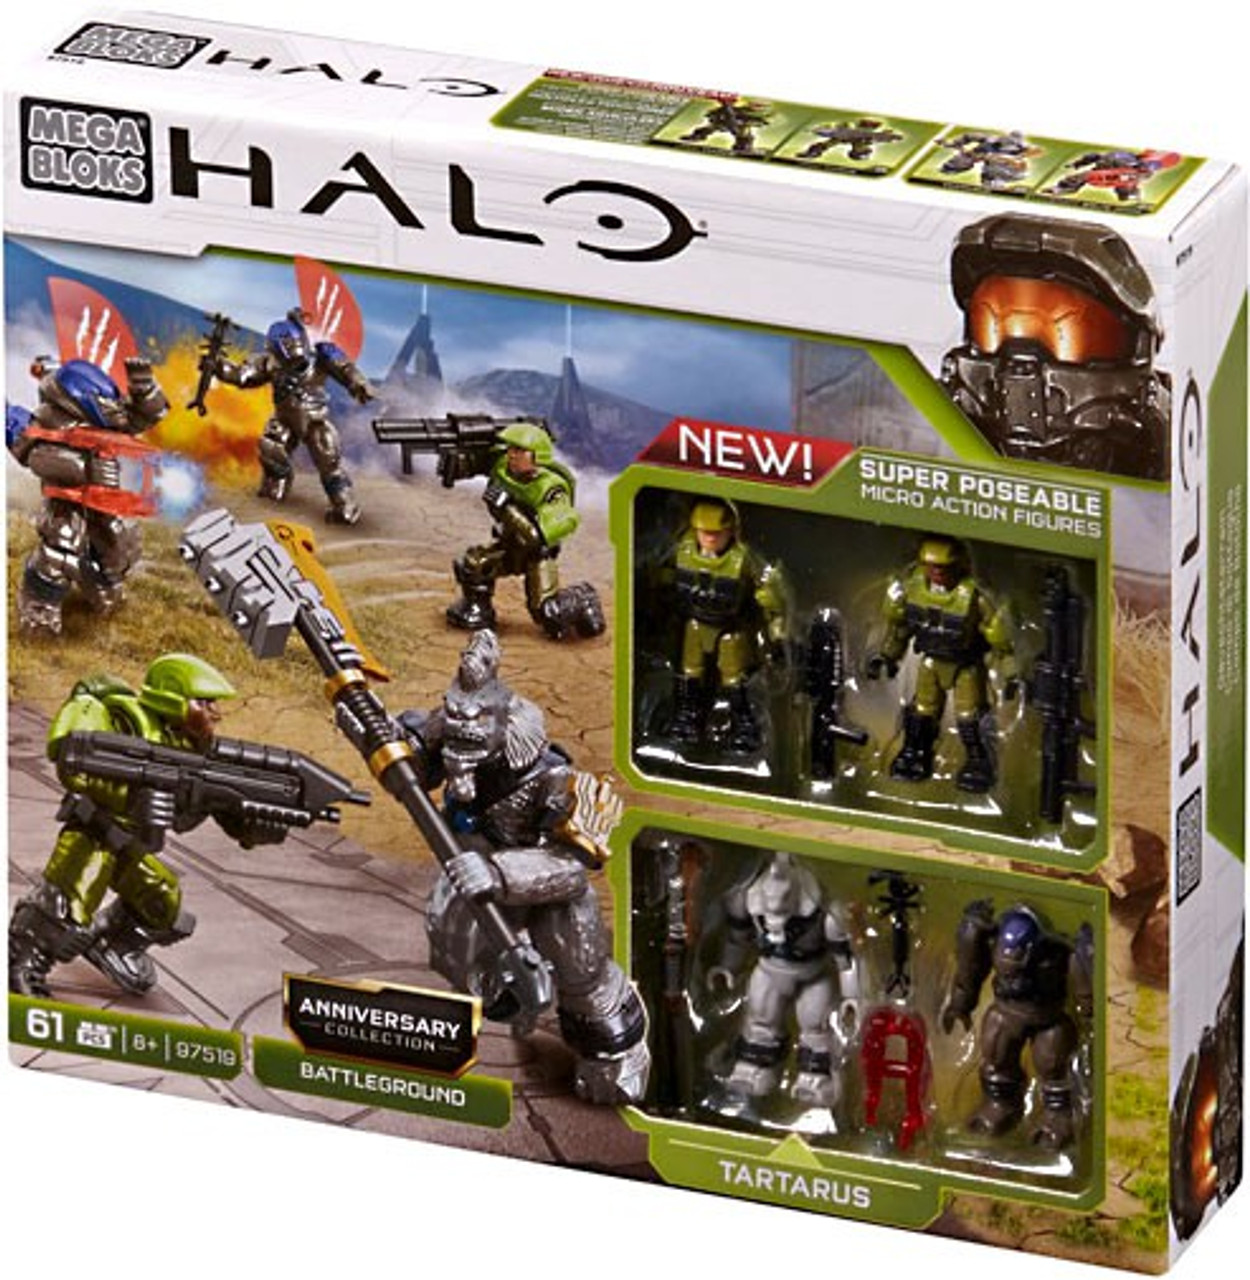 Mega Bloks Halo Anniversary Collection Battleground Exclusive Set 97519